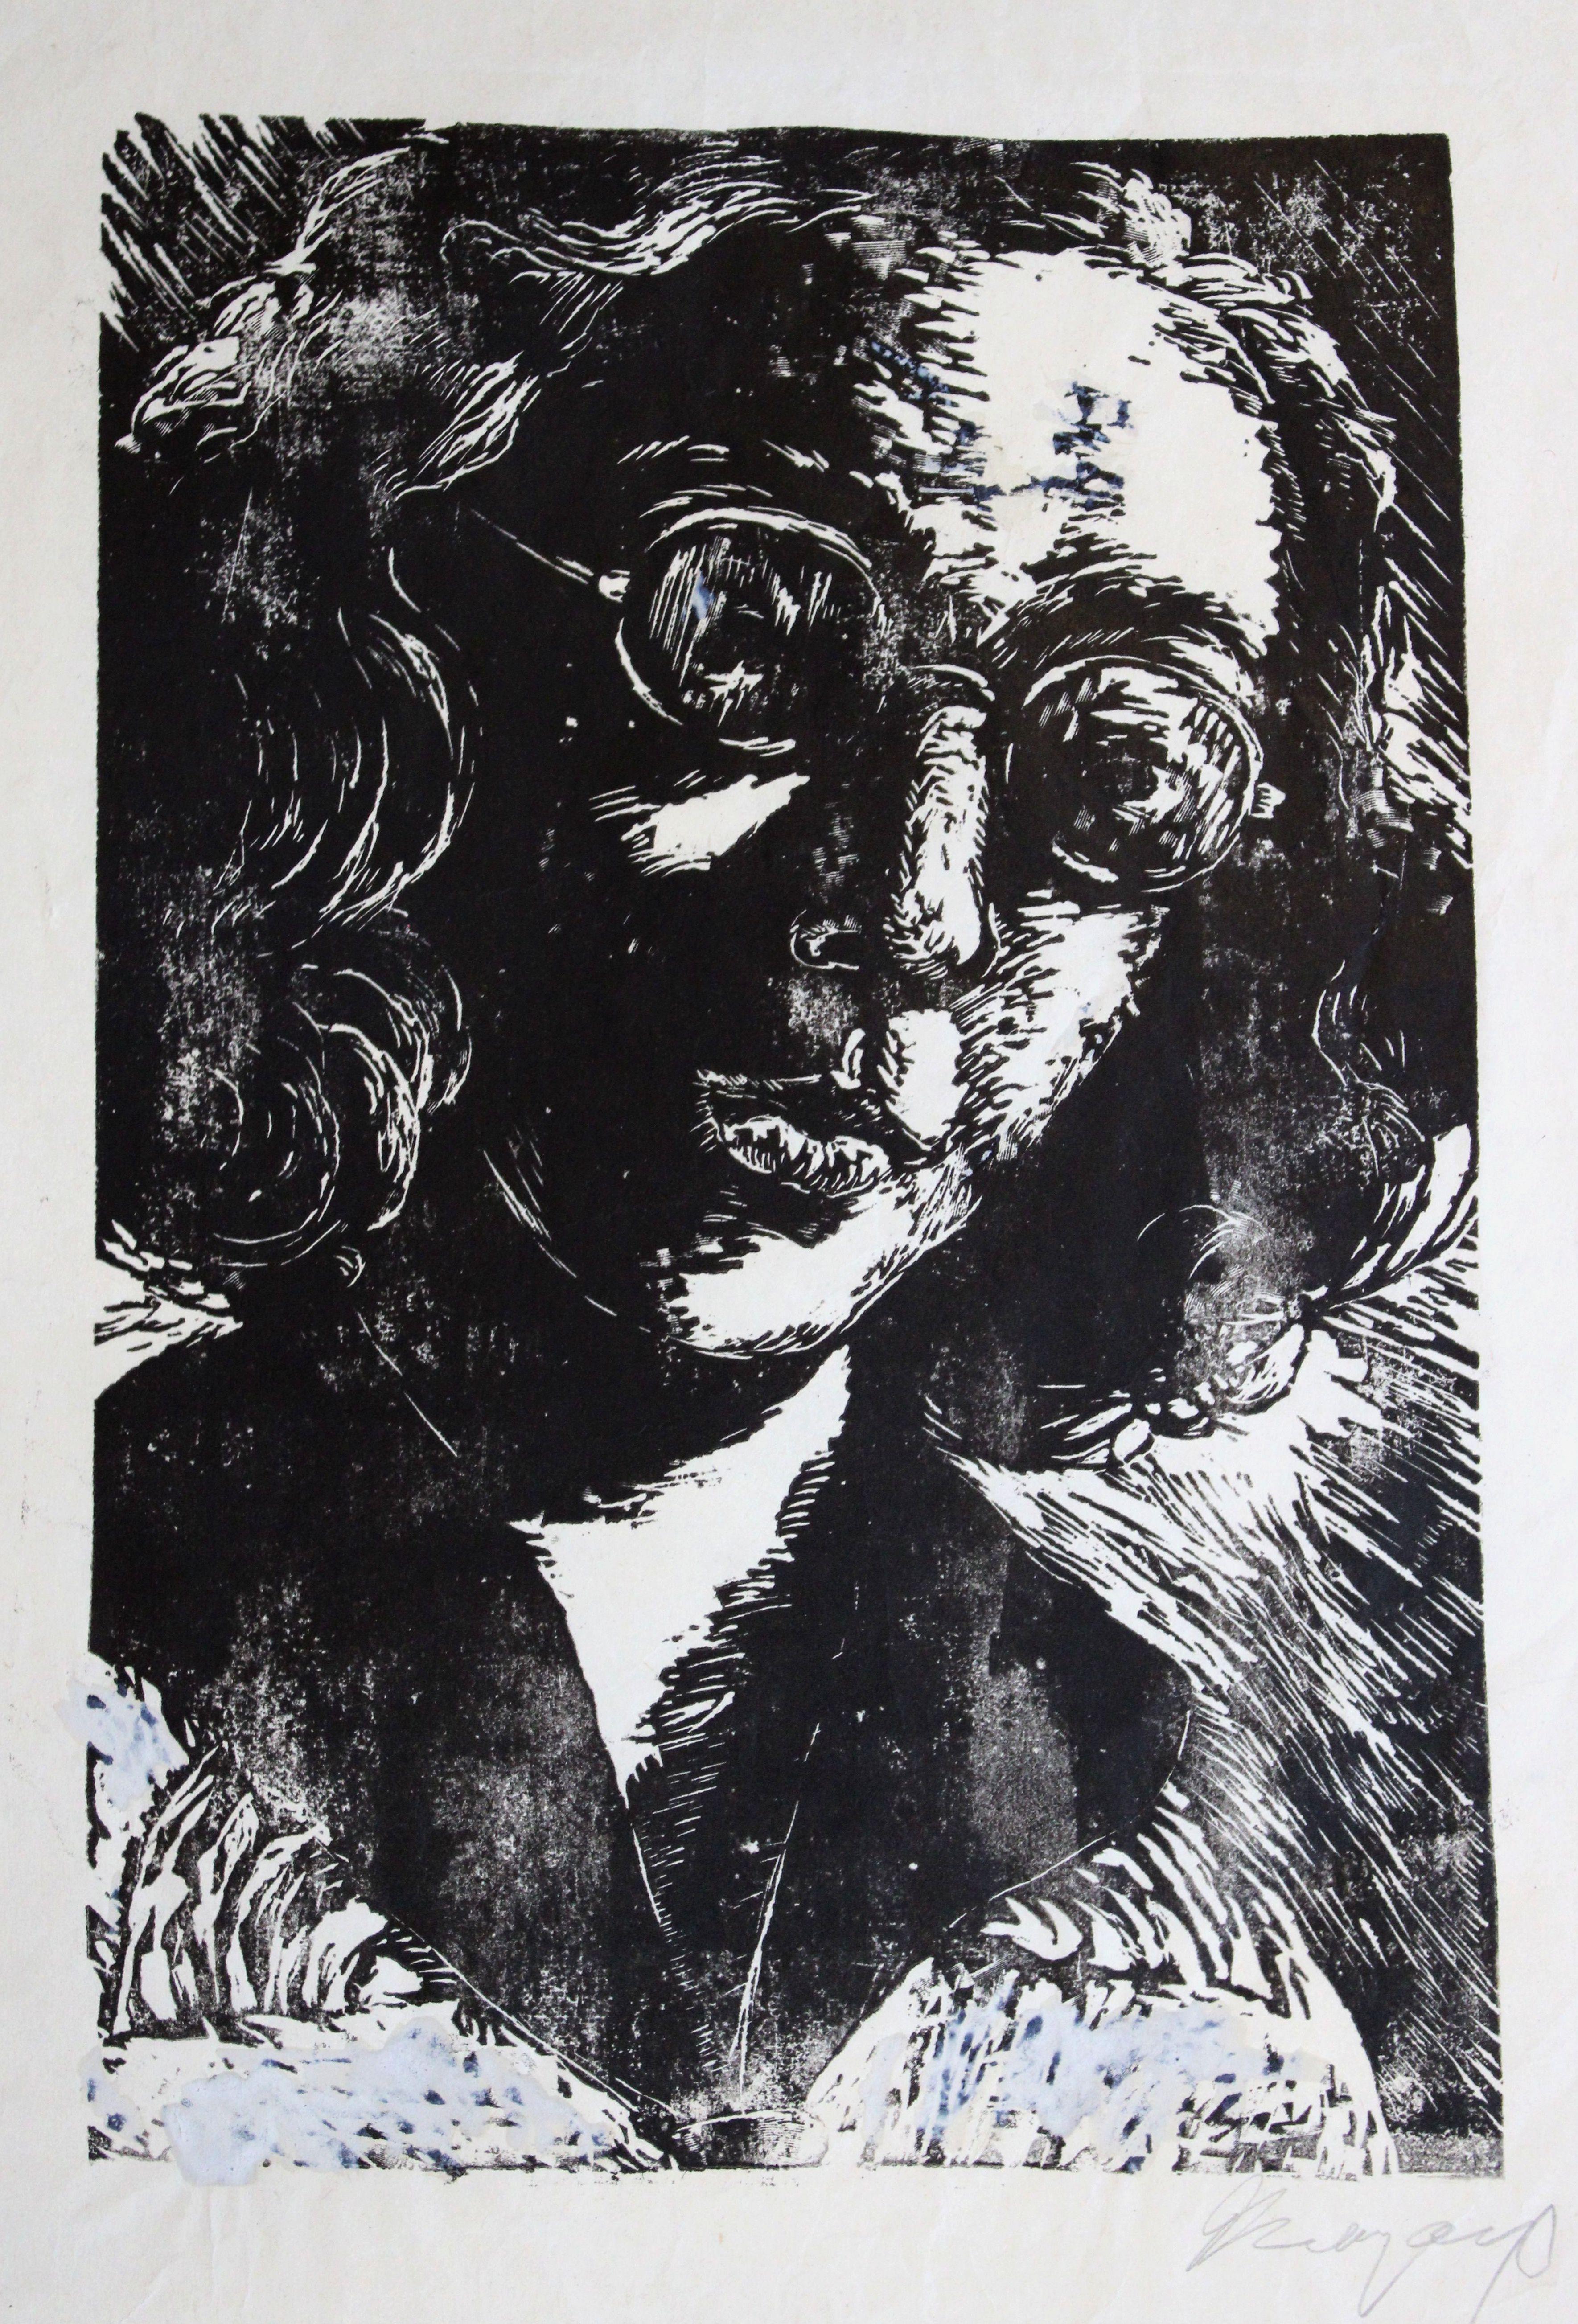 Self-Portrait. Papier, Linolschnitt, 31x21,5 cm